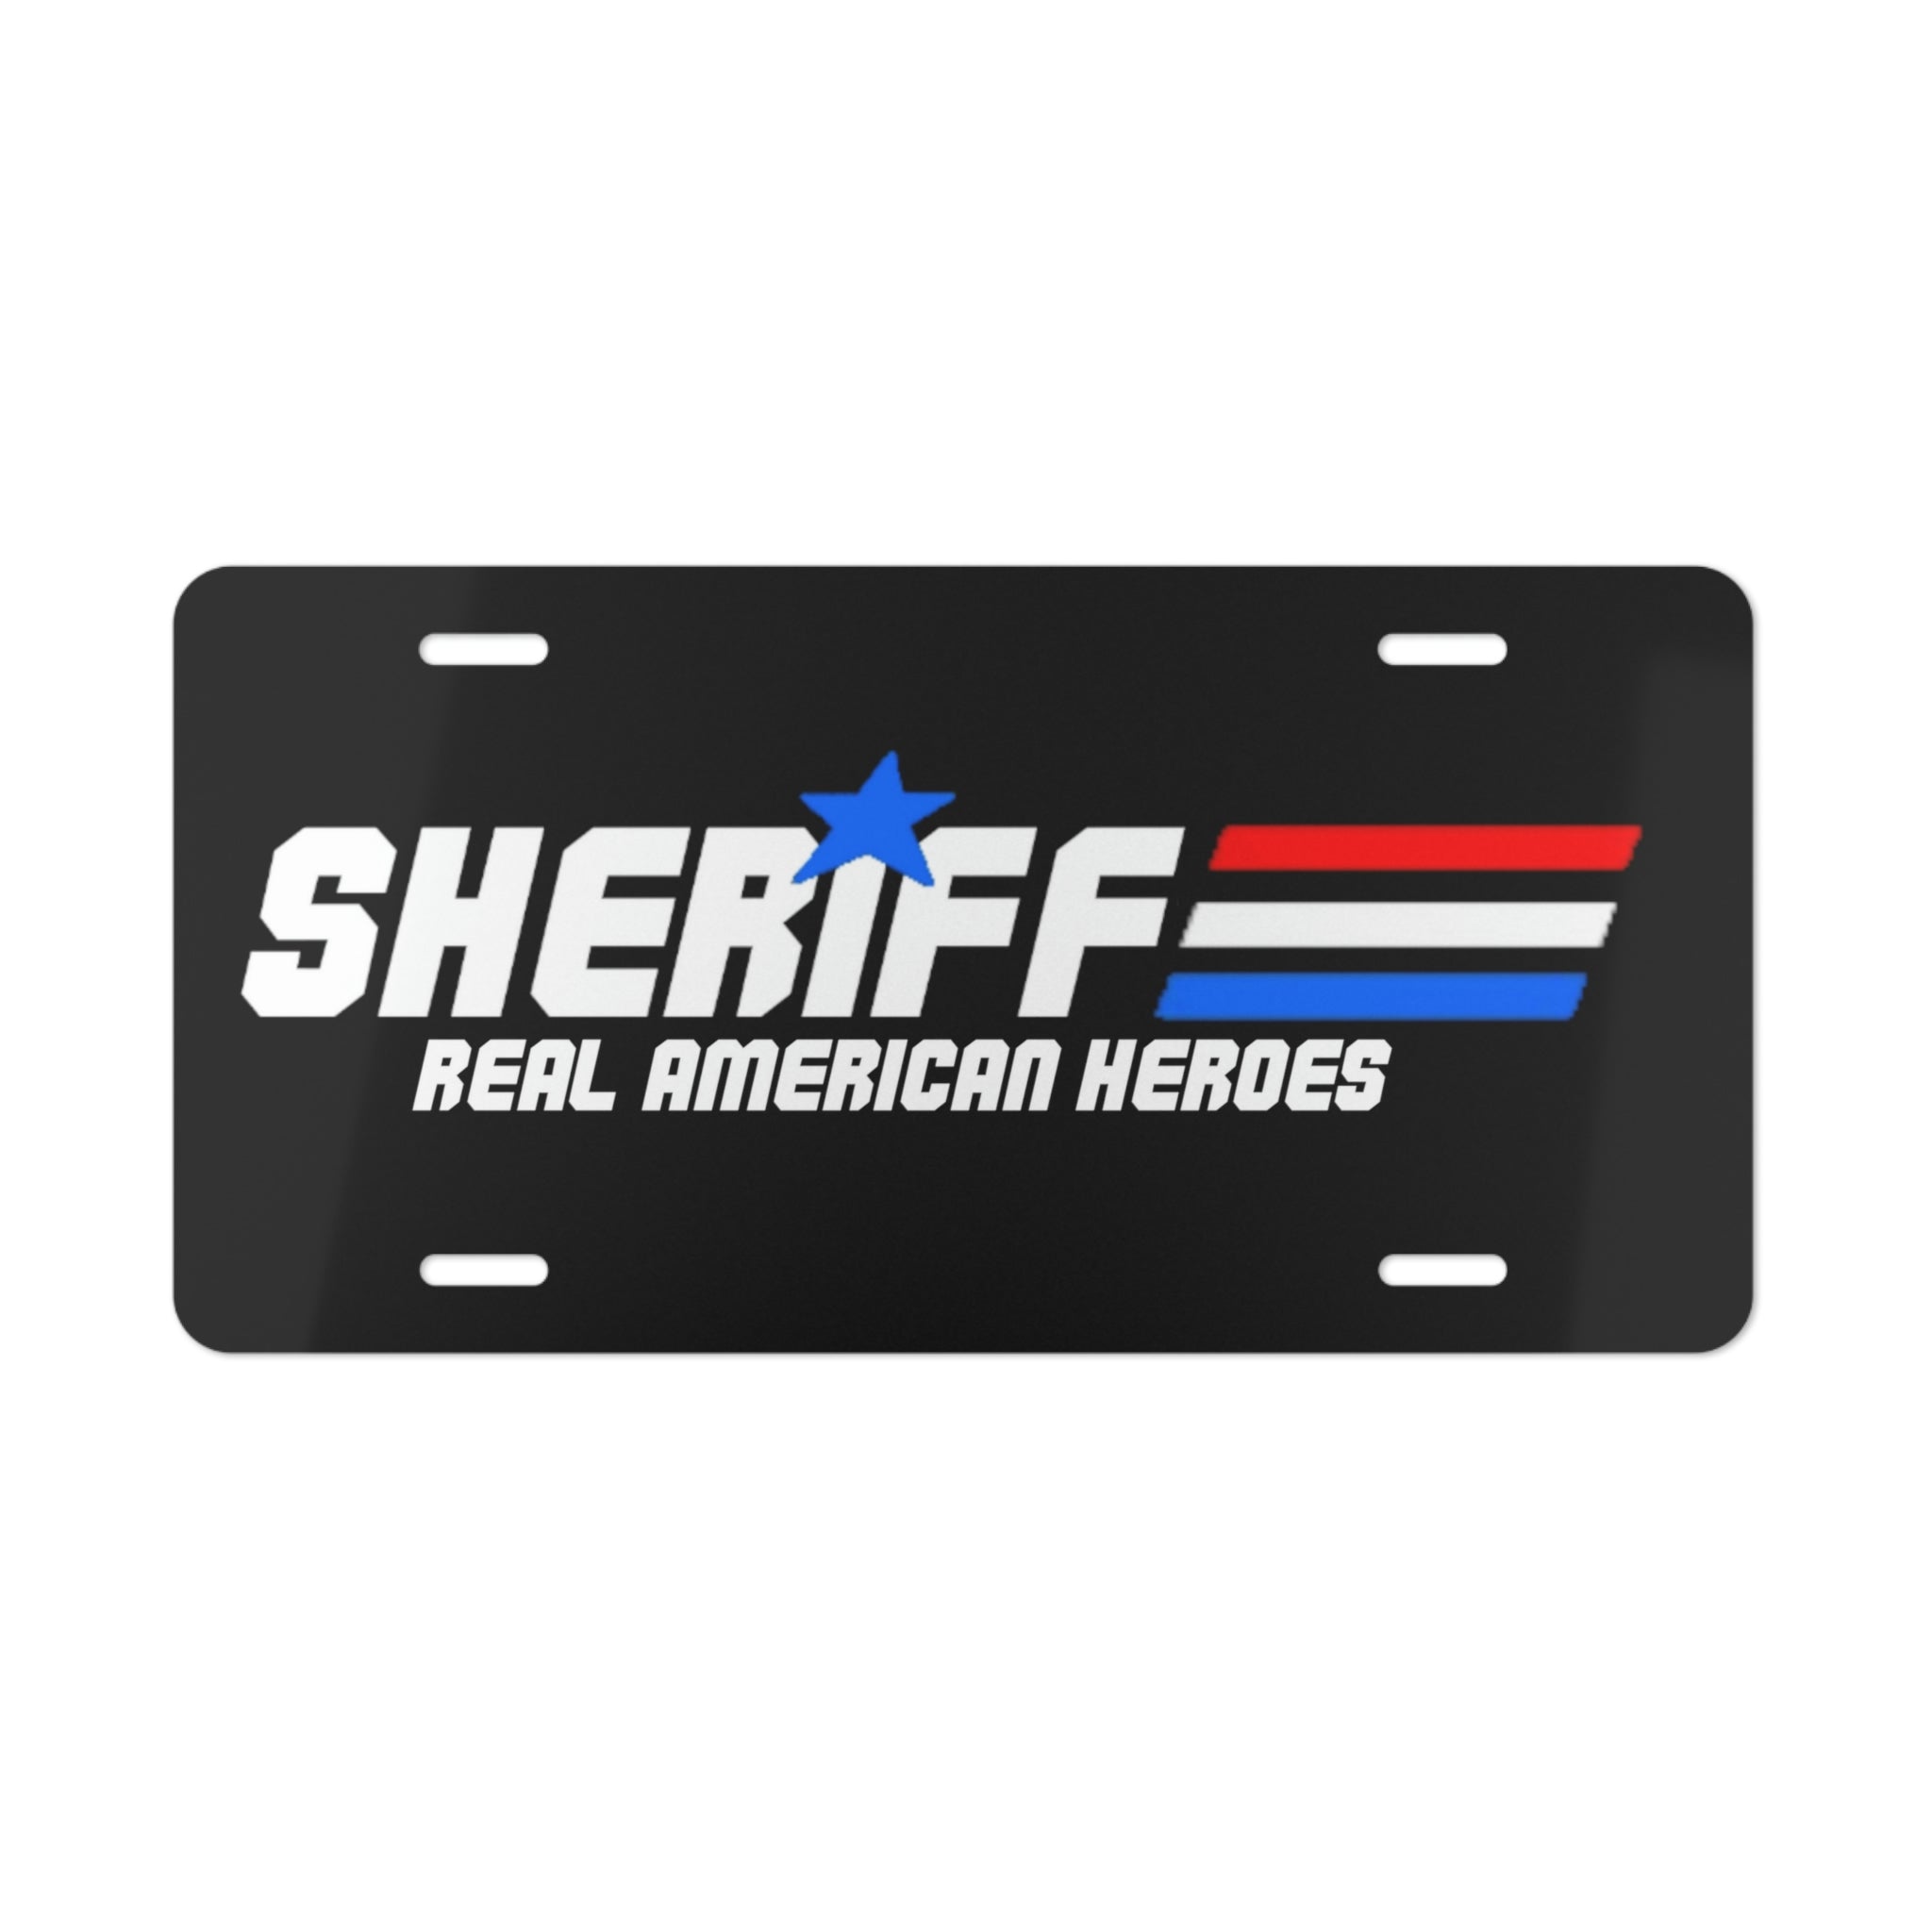 Aluminum License Plate - Sheriff "Real American Heroes"